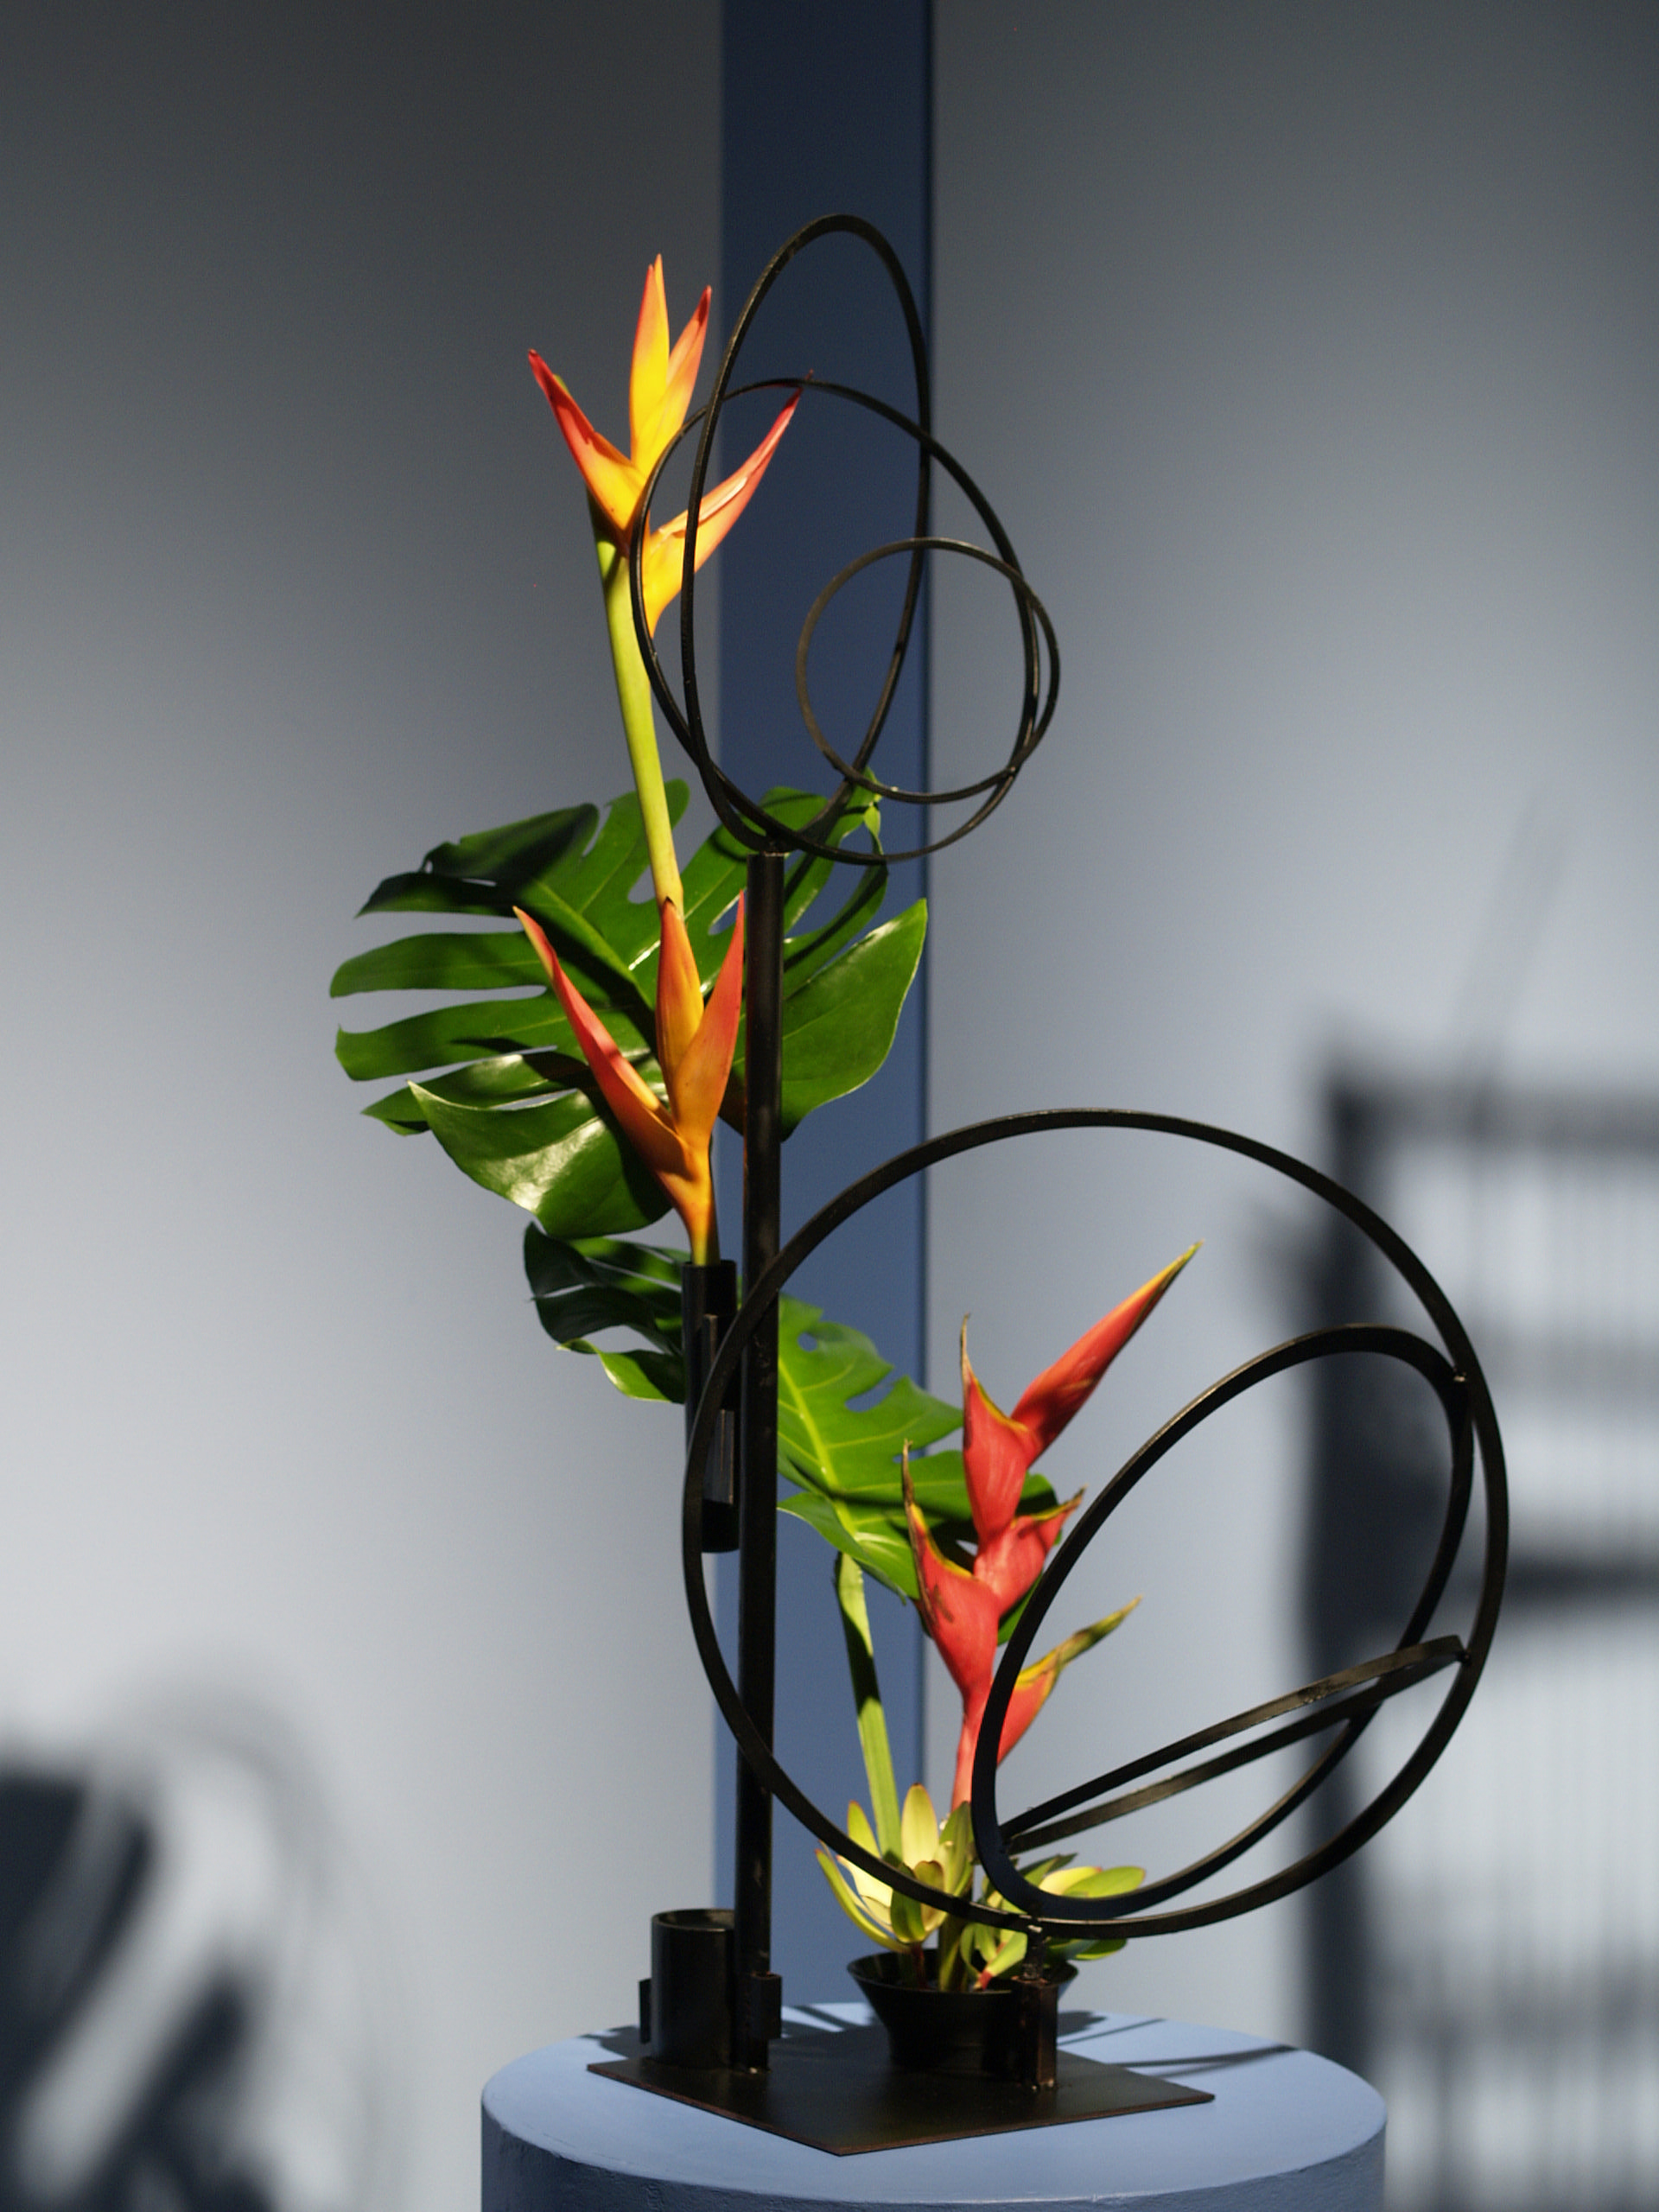 Flower arrangement by Catherine Felton